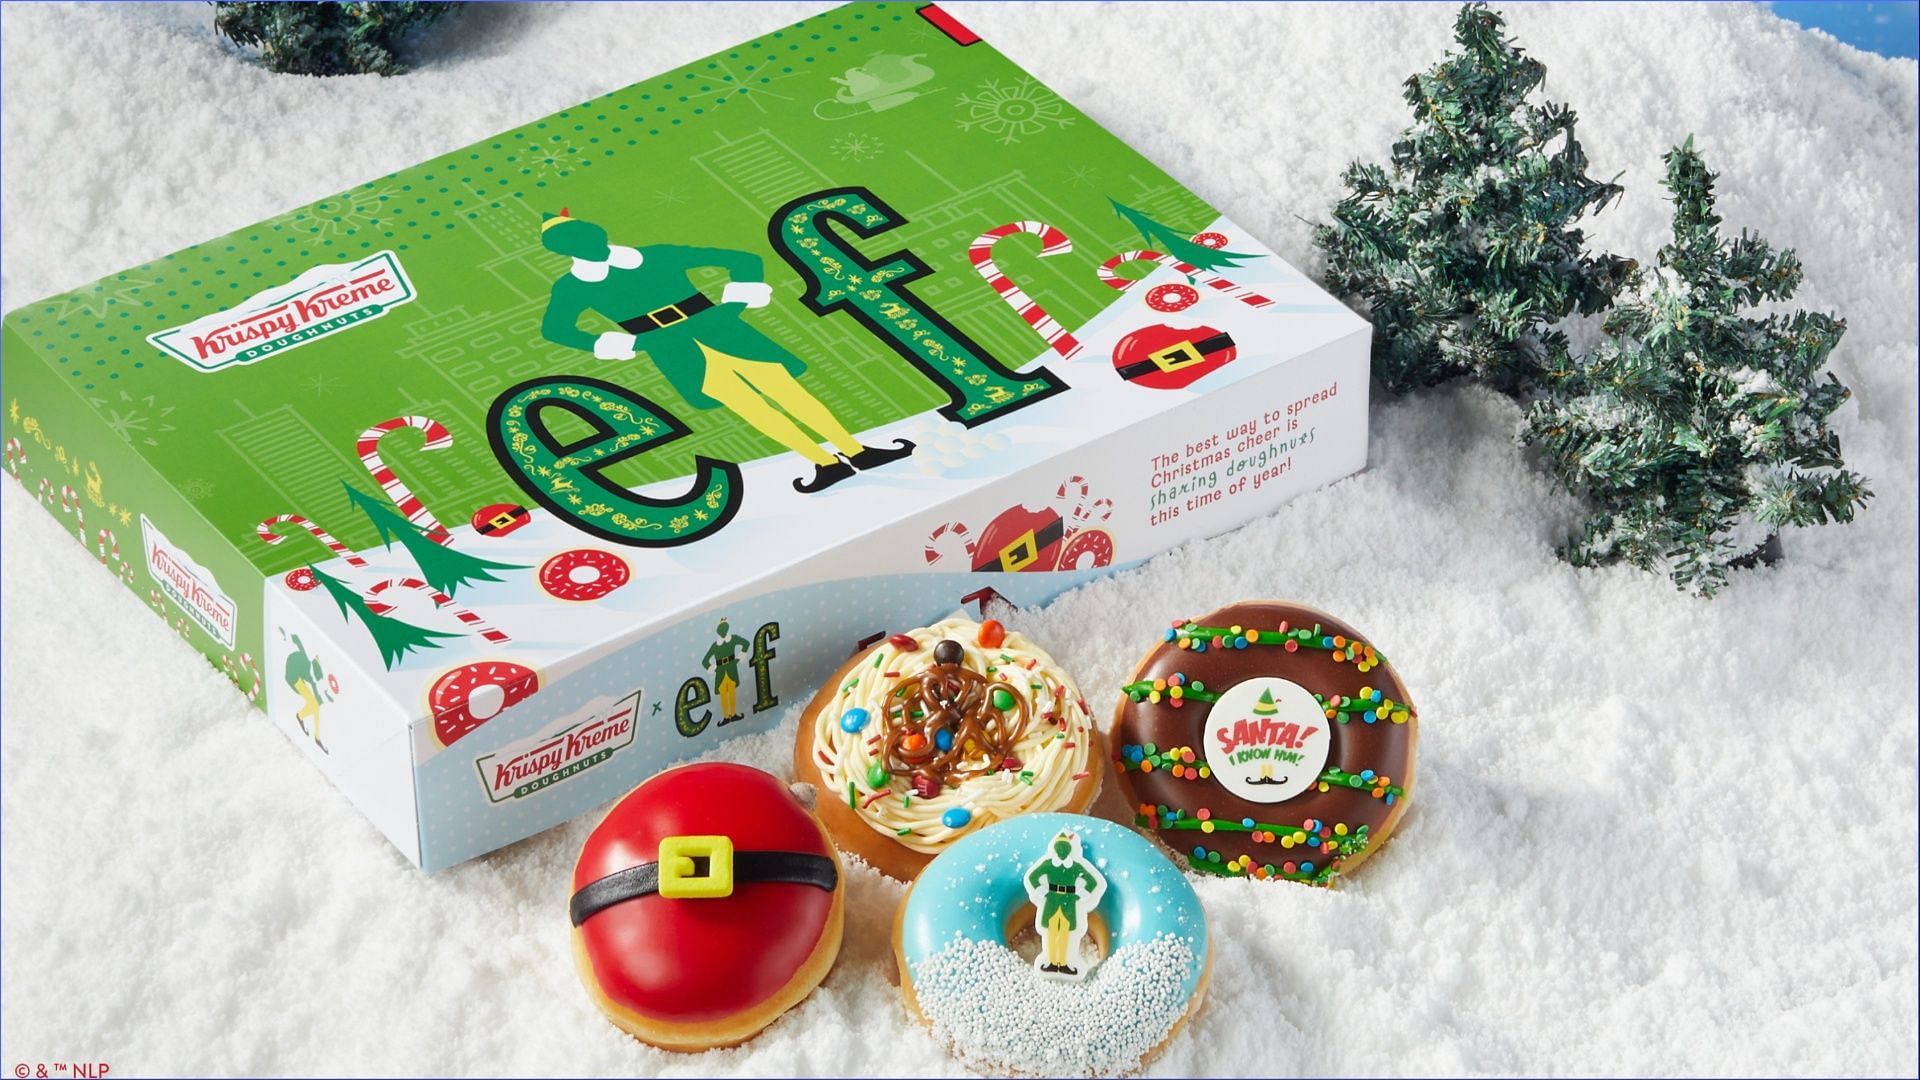 Krispy Kreme introduces new doughnuts in celebration of the Elf movie (Image via Krispy Kreme)